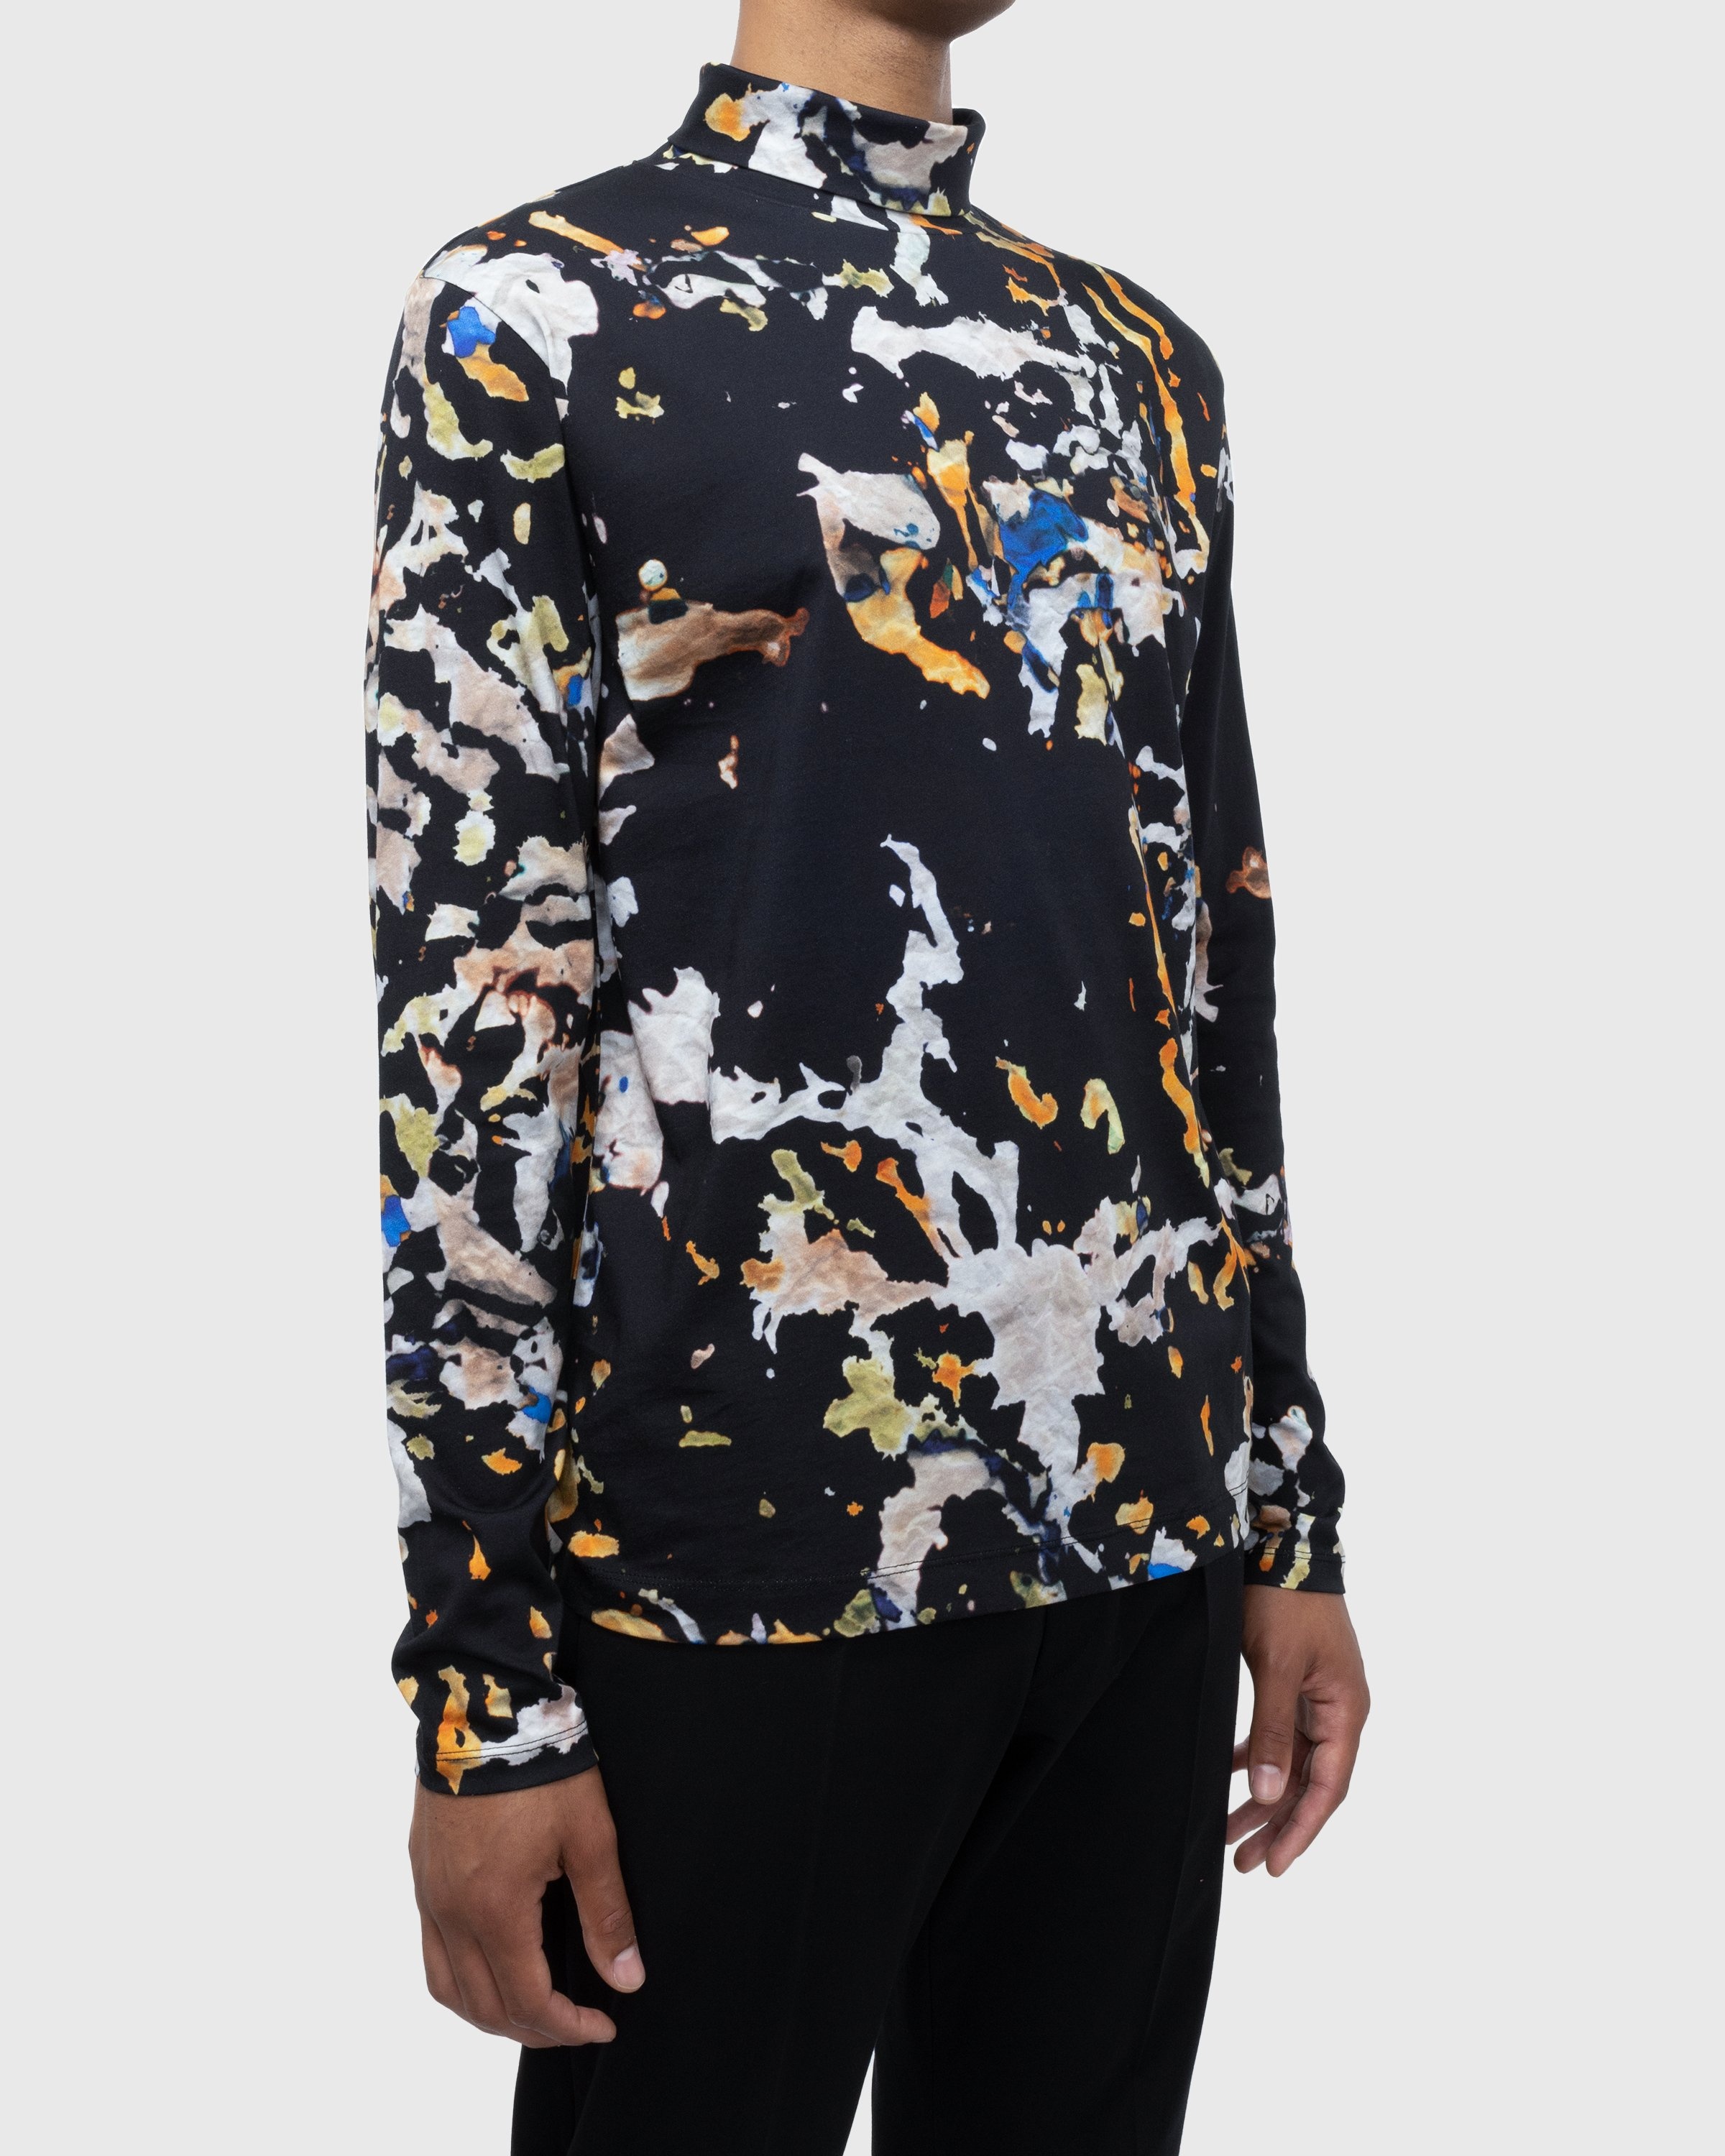 Dries van Noten – Heyzo Turtleneck Jersey Shirt Multi - Sweats - Multi - Image 2